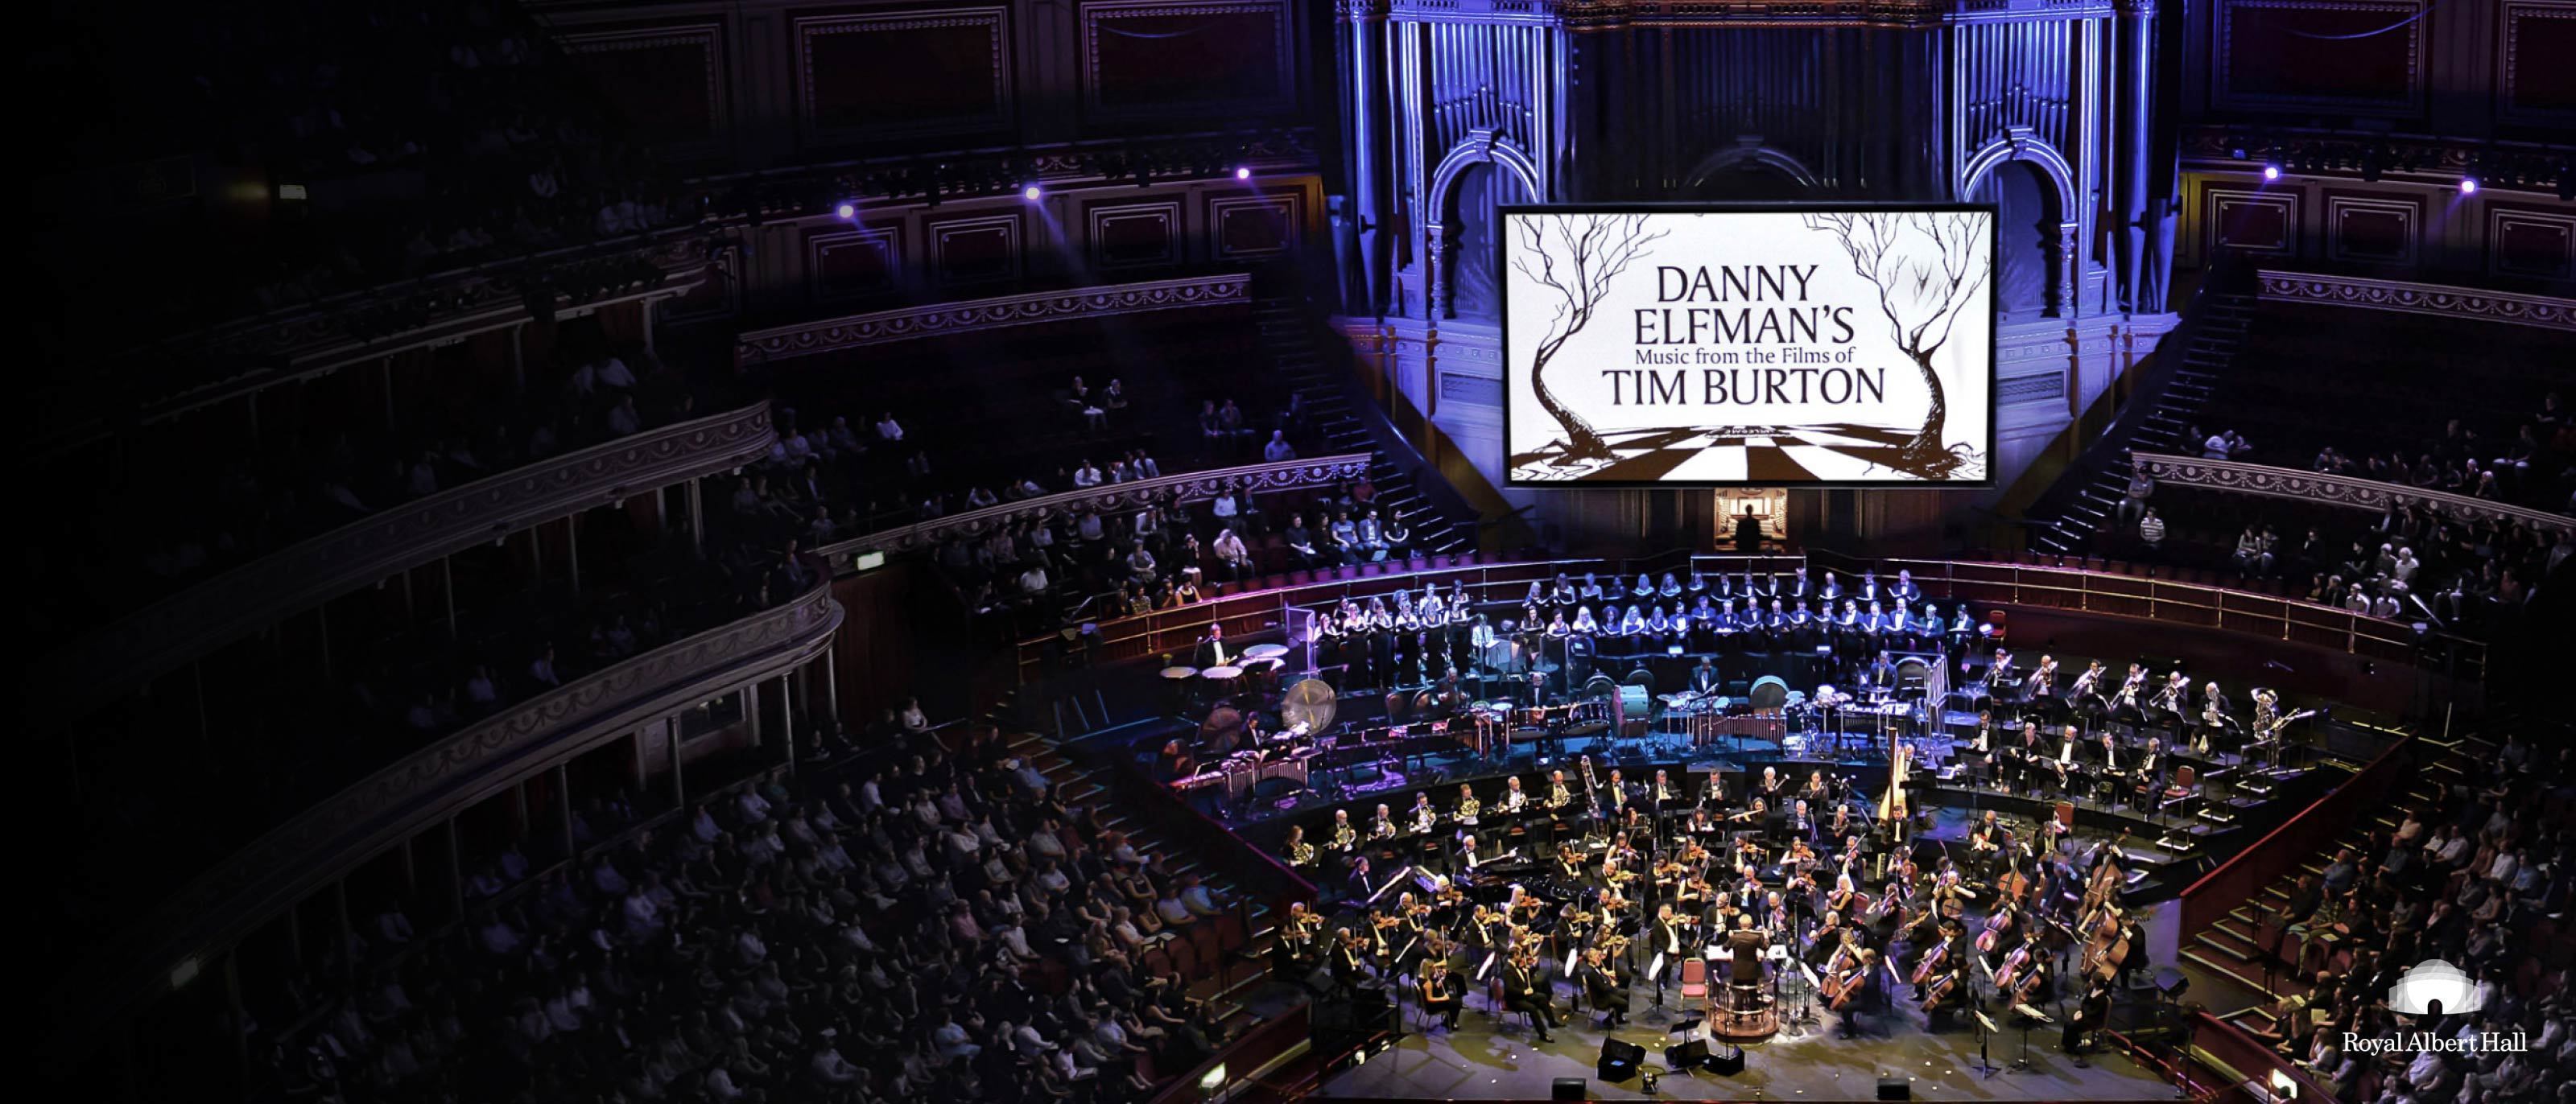 Danny Elfman's Music from the Films of Tim Burton - Royal Albert Hall